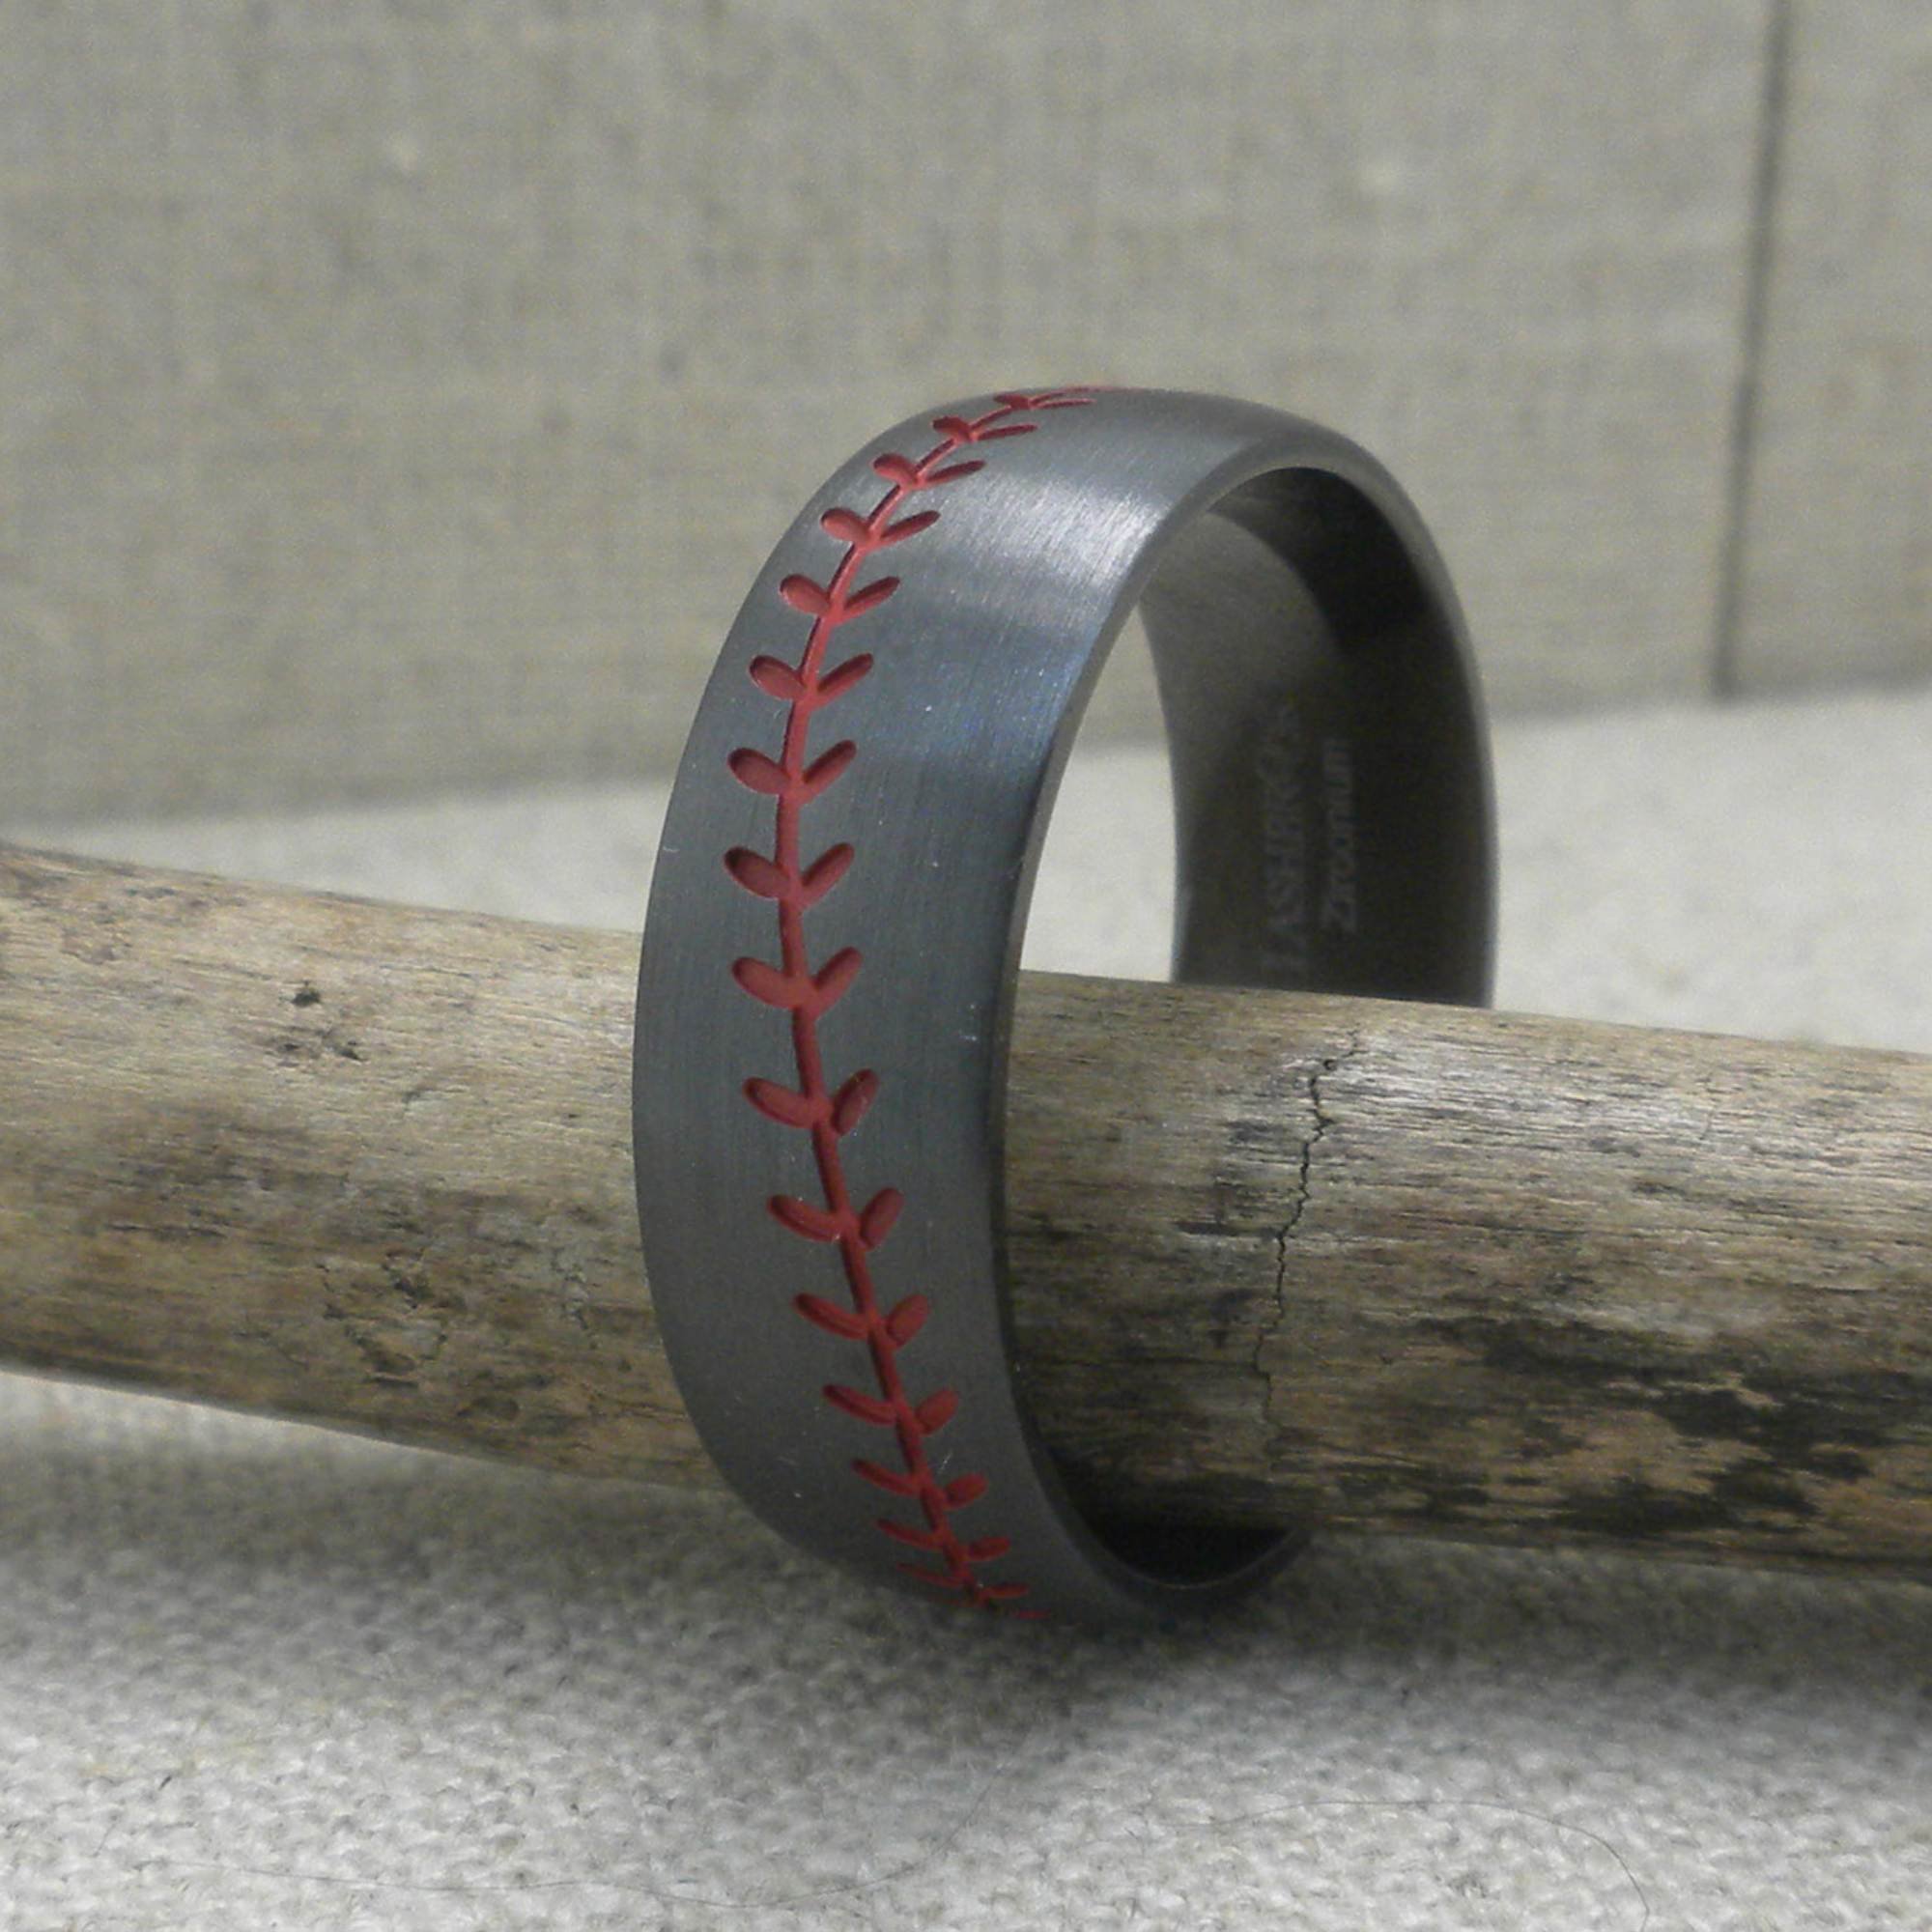 Black Zirconium Baseball Wedding Ring with Red Stitches